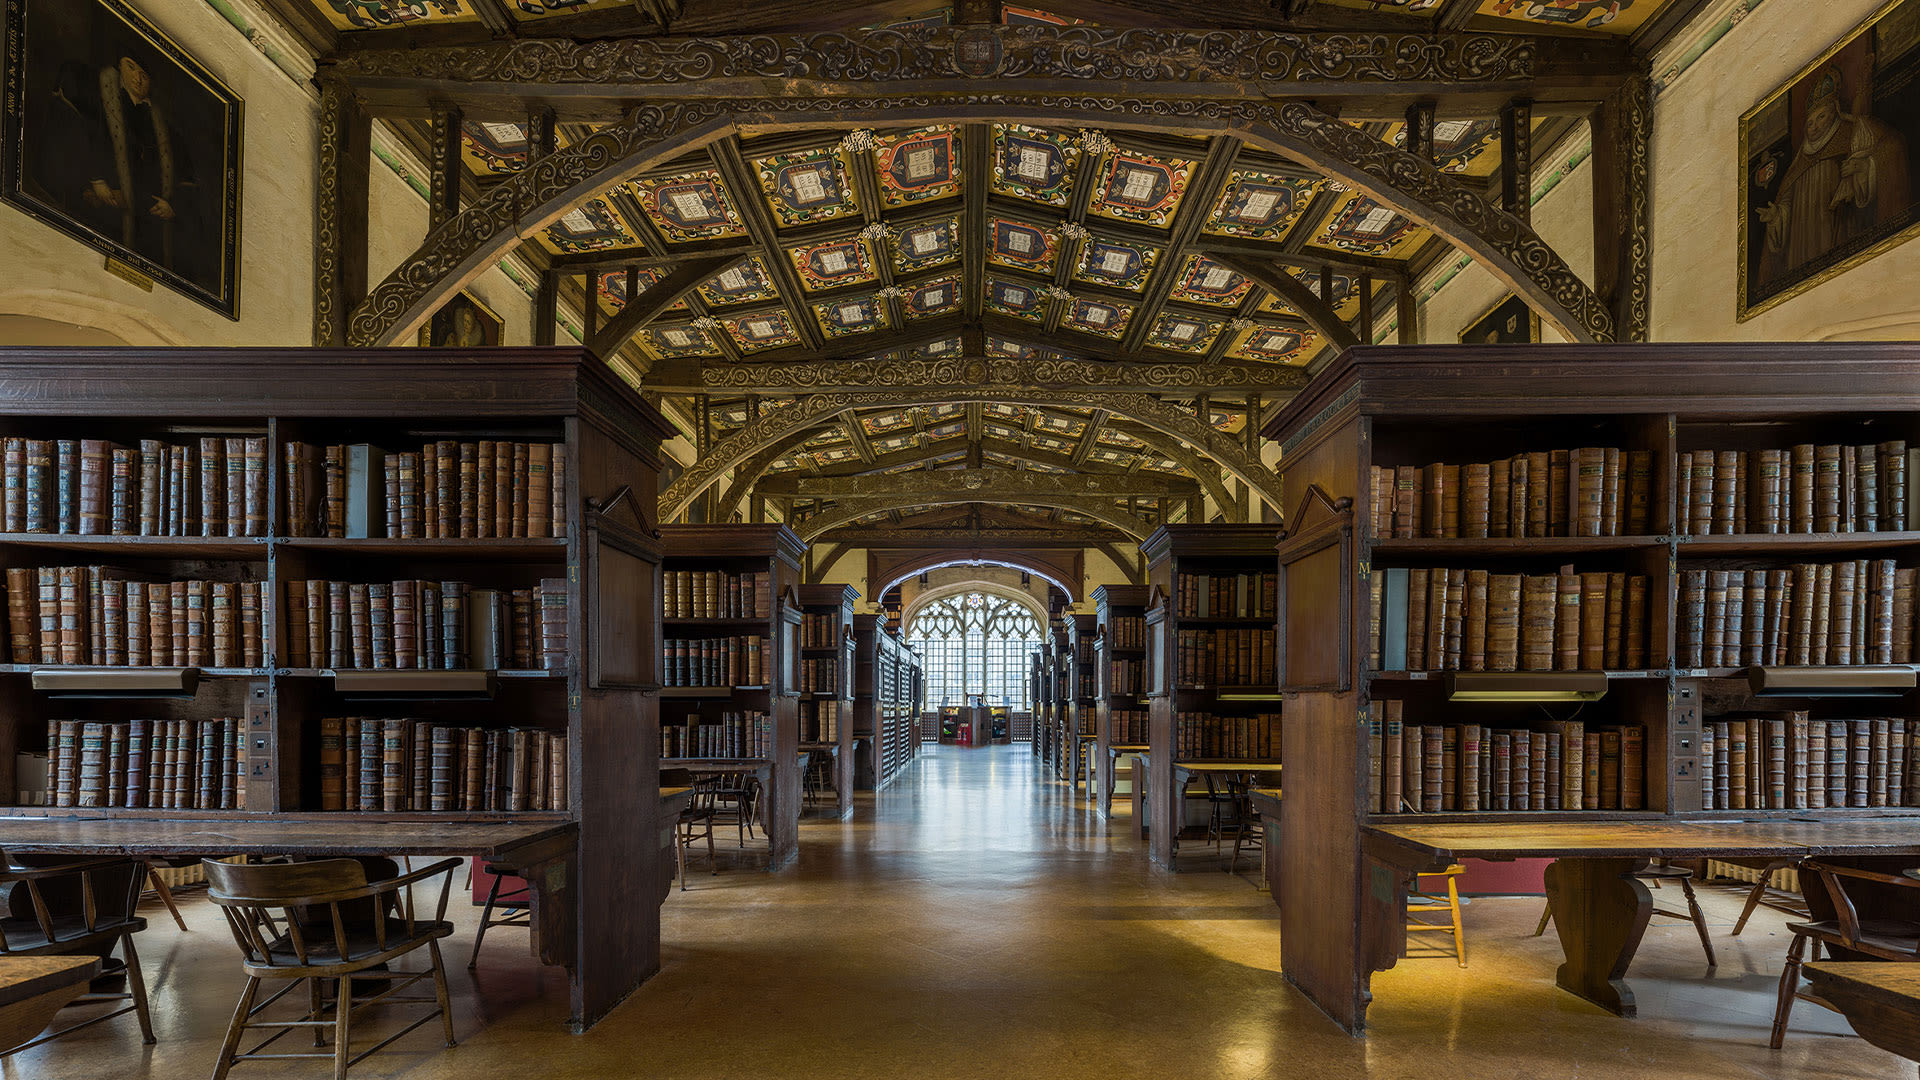 Bodleain Library in Oxford interior